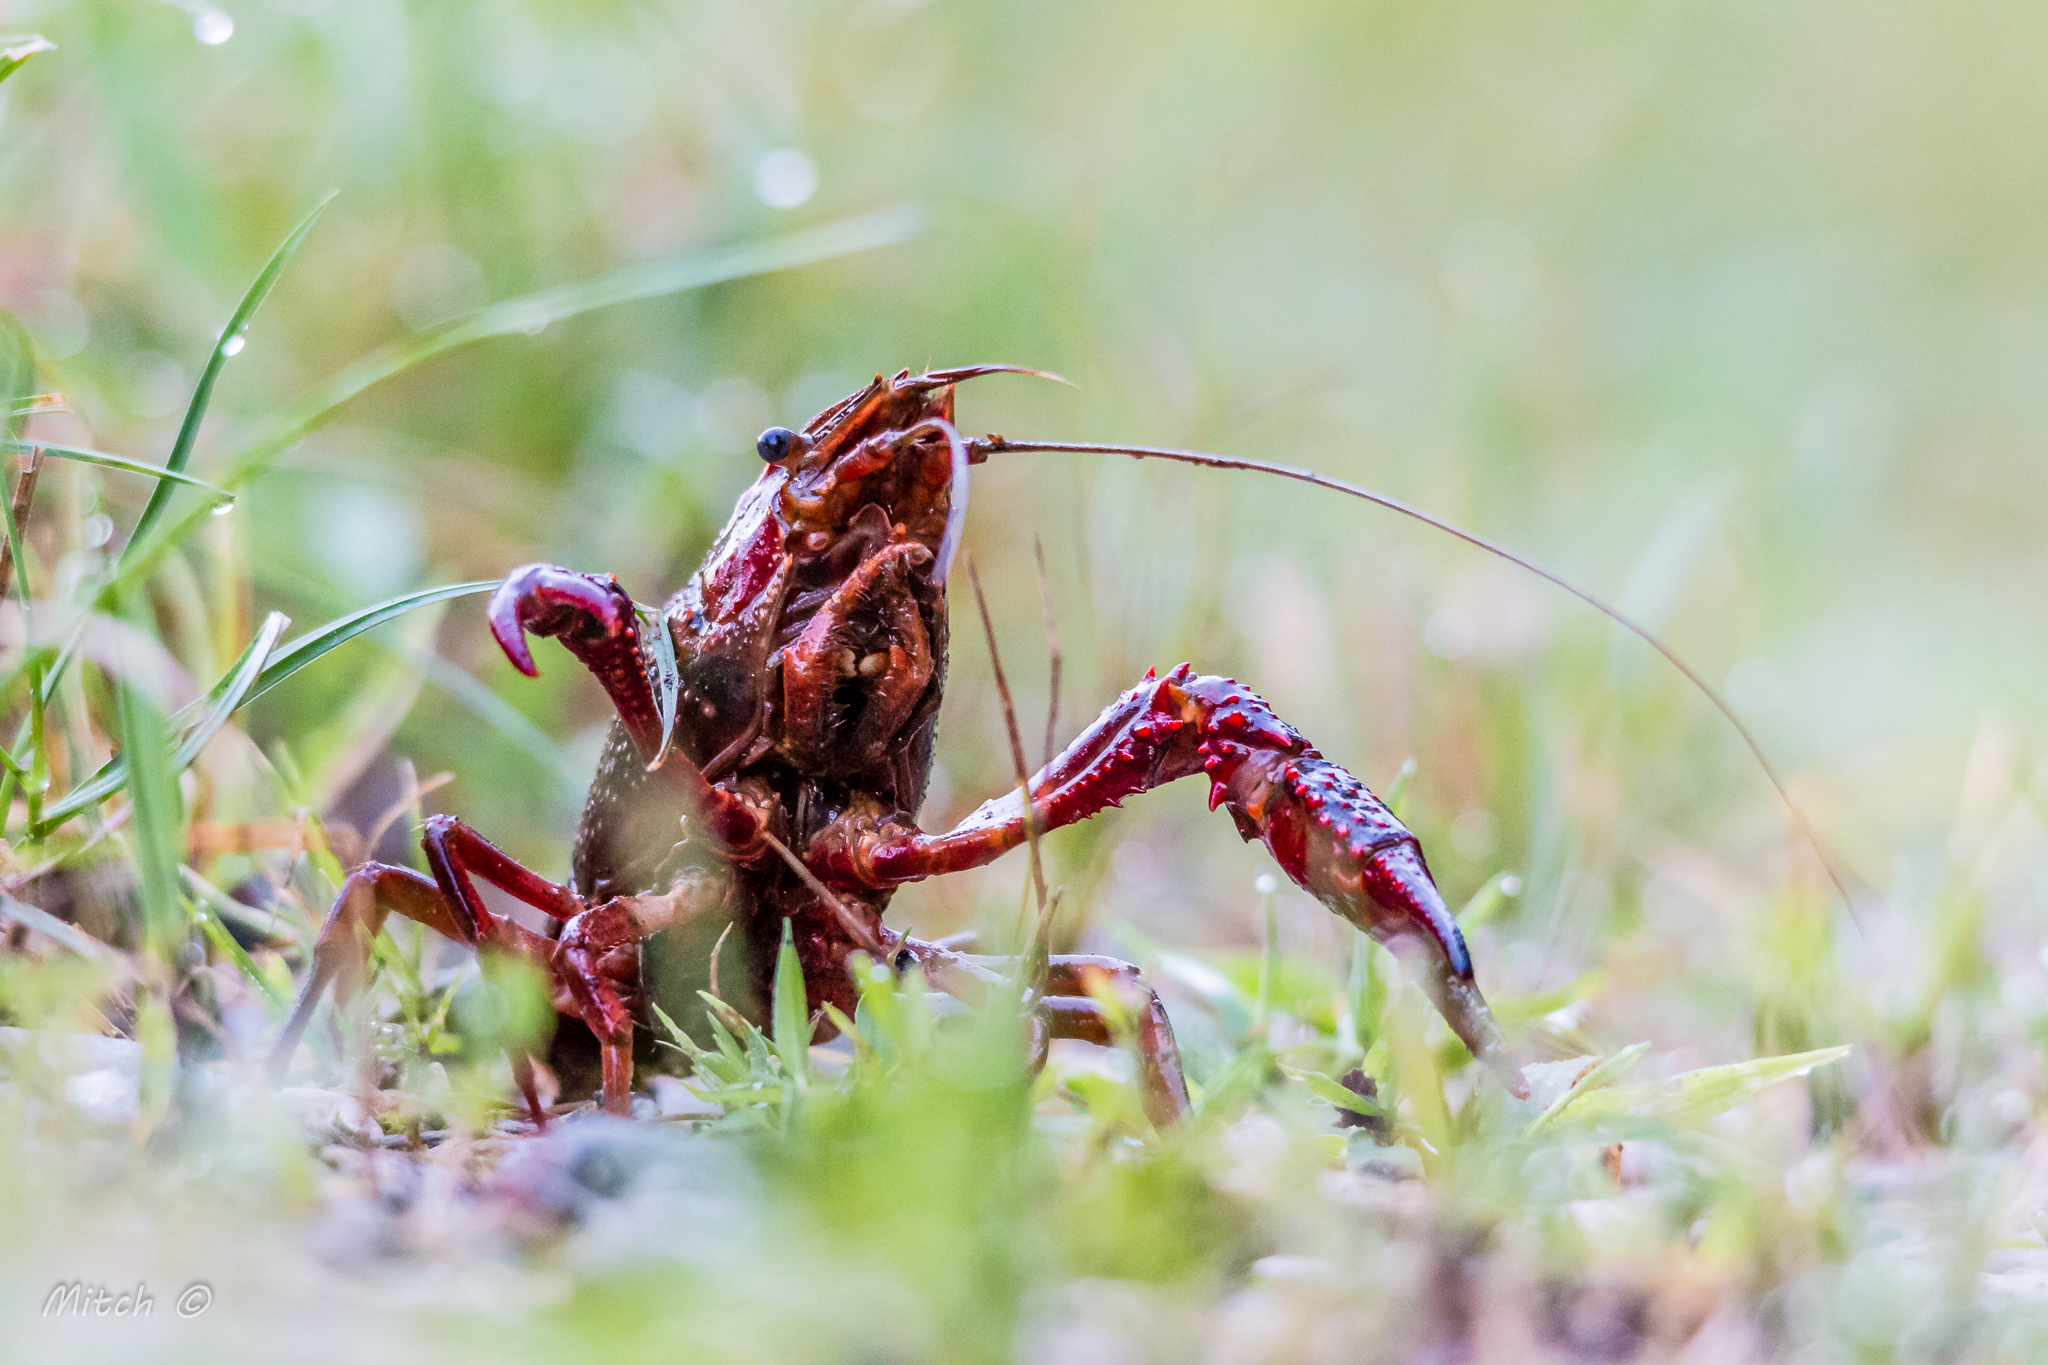 Swamp crayfish...